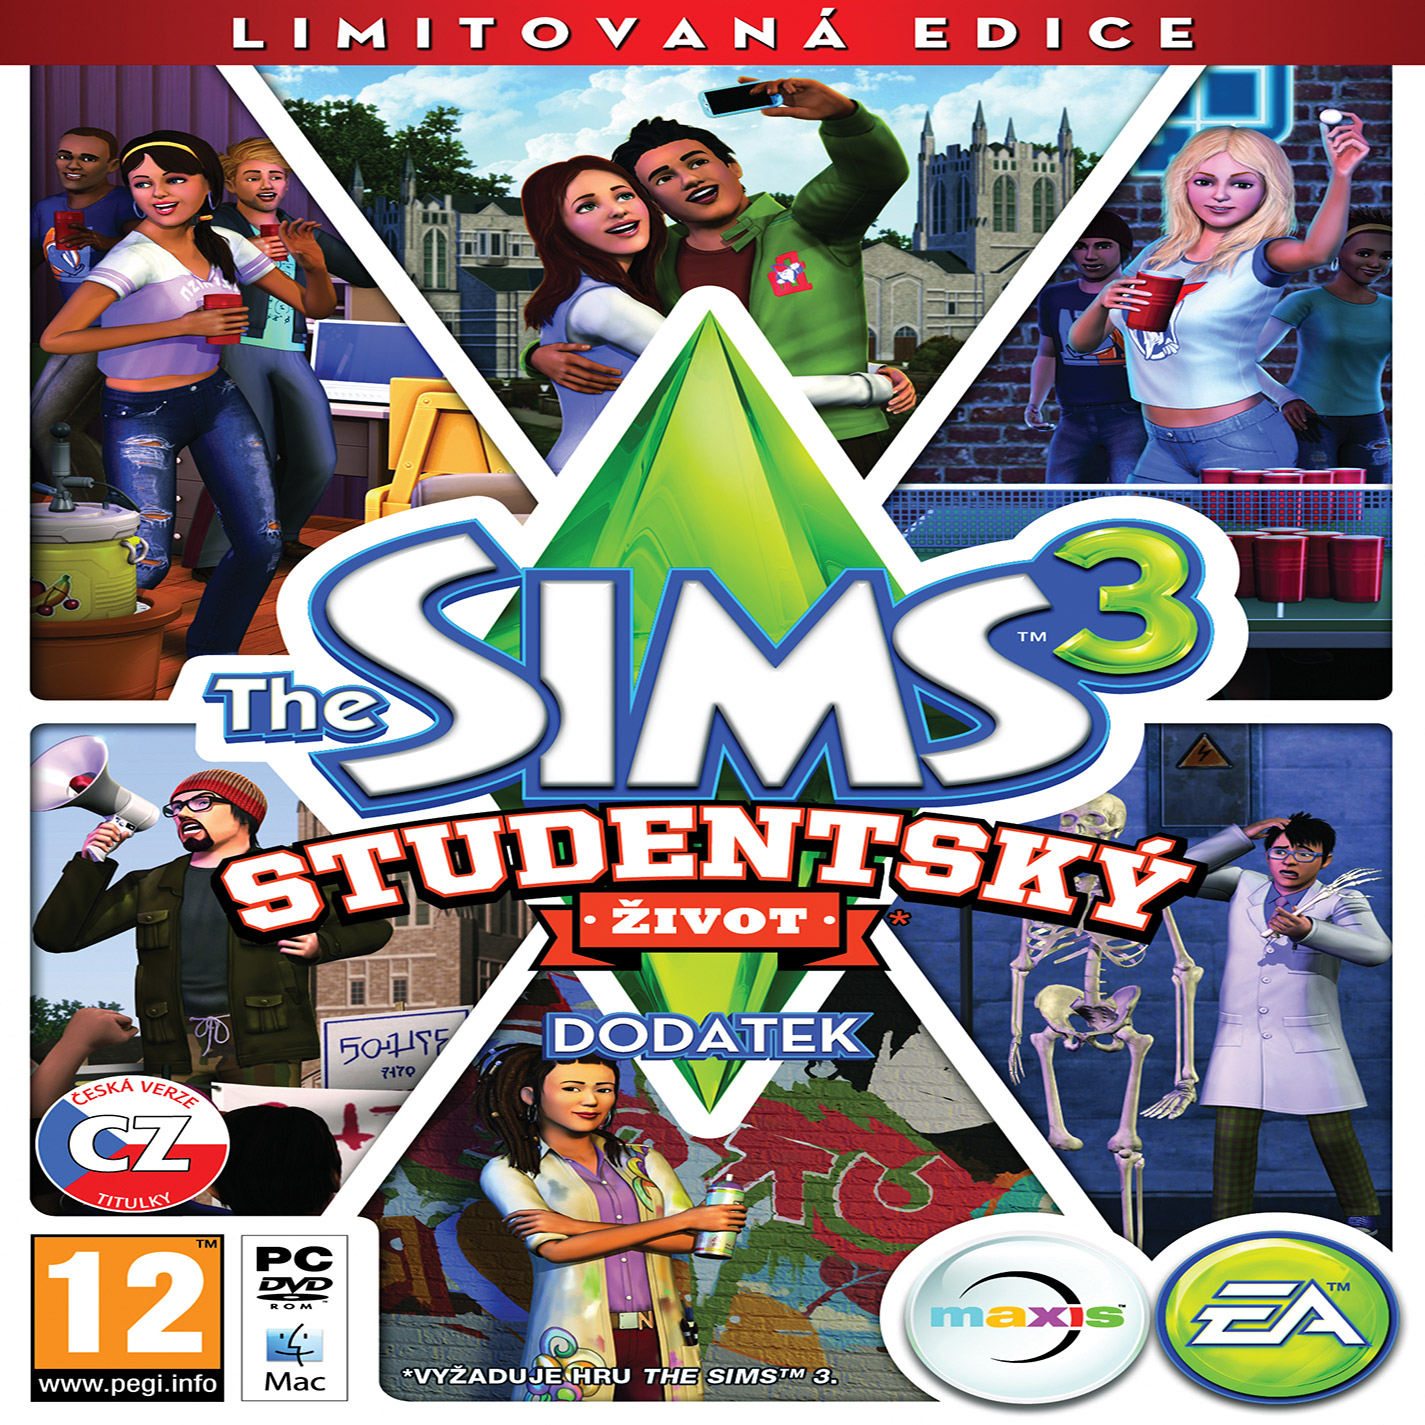 The Sims 3: University Life - pedn CD obal 2